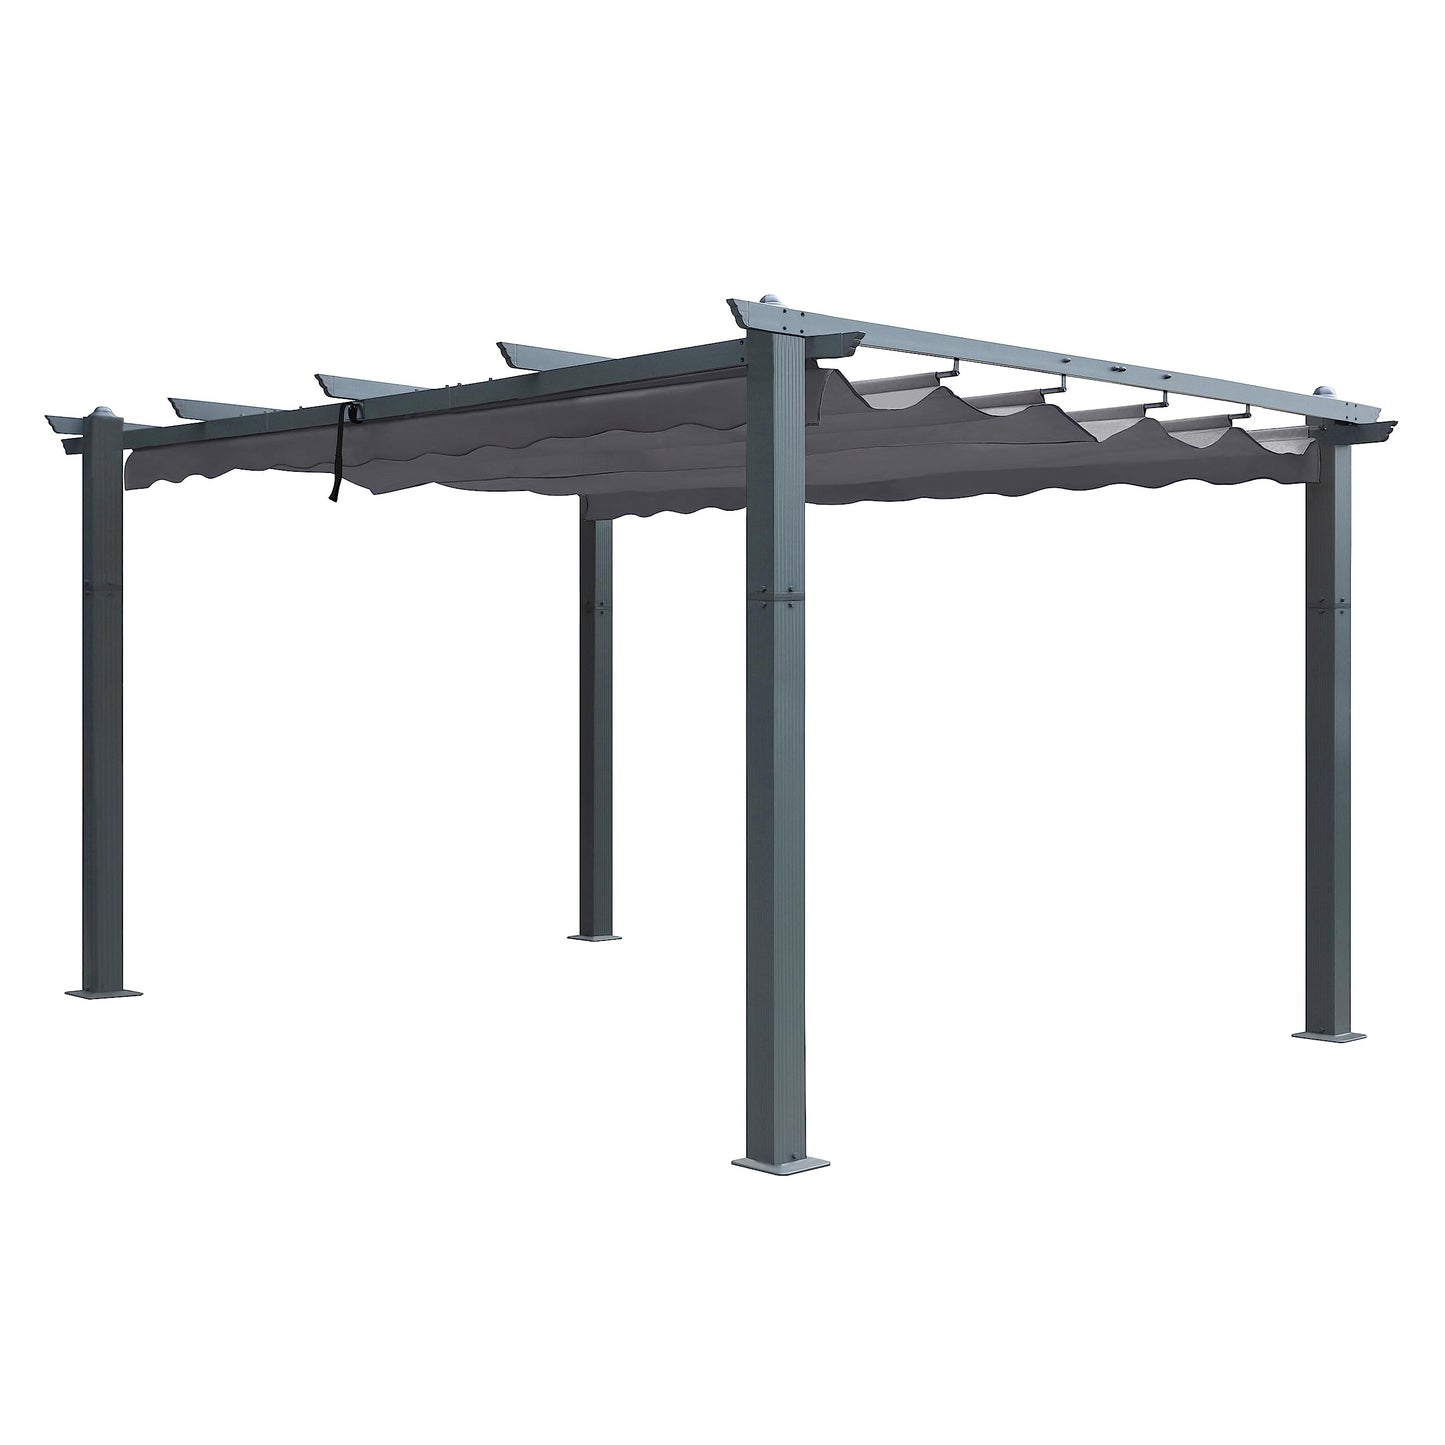 13x10ft Pergola, Aluminum Pergola w/Thicker Post & Upgraded Retractable Pergola Canopy, Metal Pergolas and Gazebos Heavy-Duty Outdoor Shelter for Porch Yard, Gray